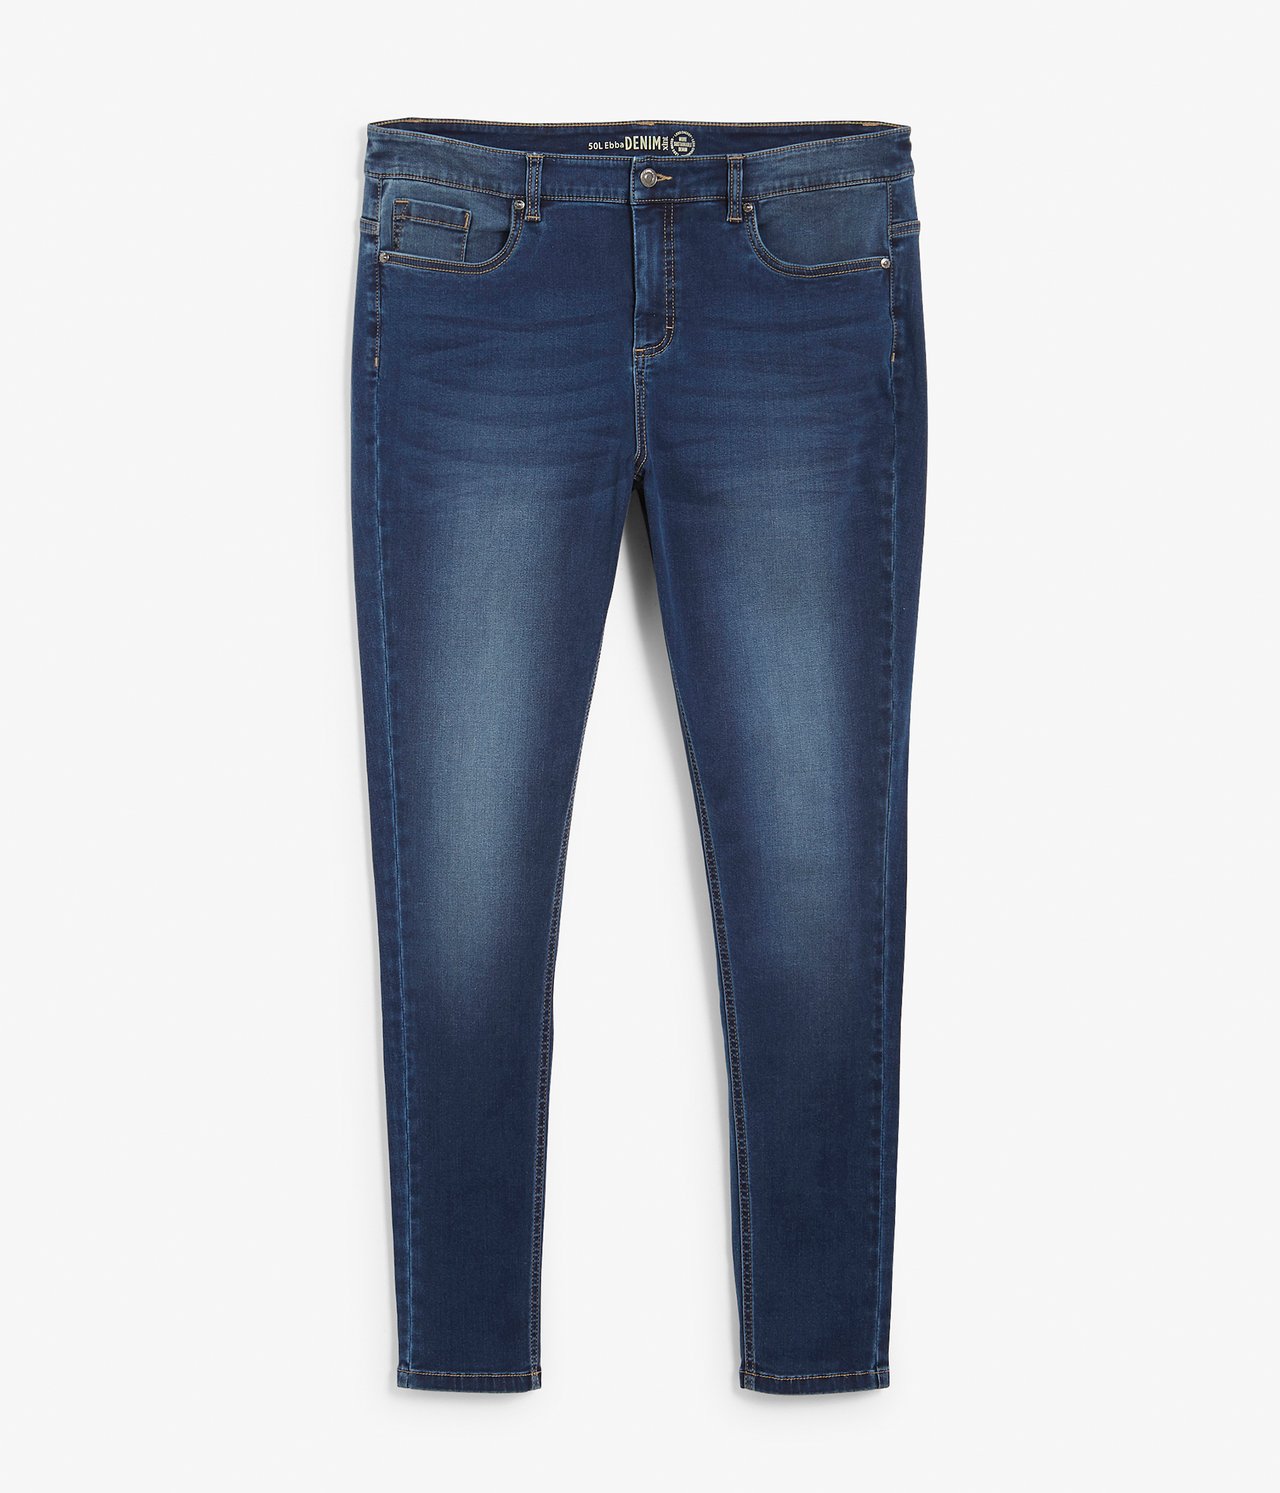 Ebba slim jeans extra long leg - Tumma denimi - 5